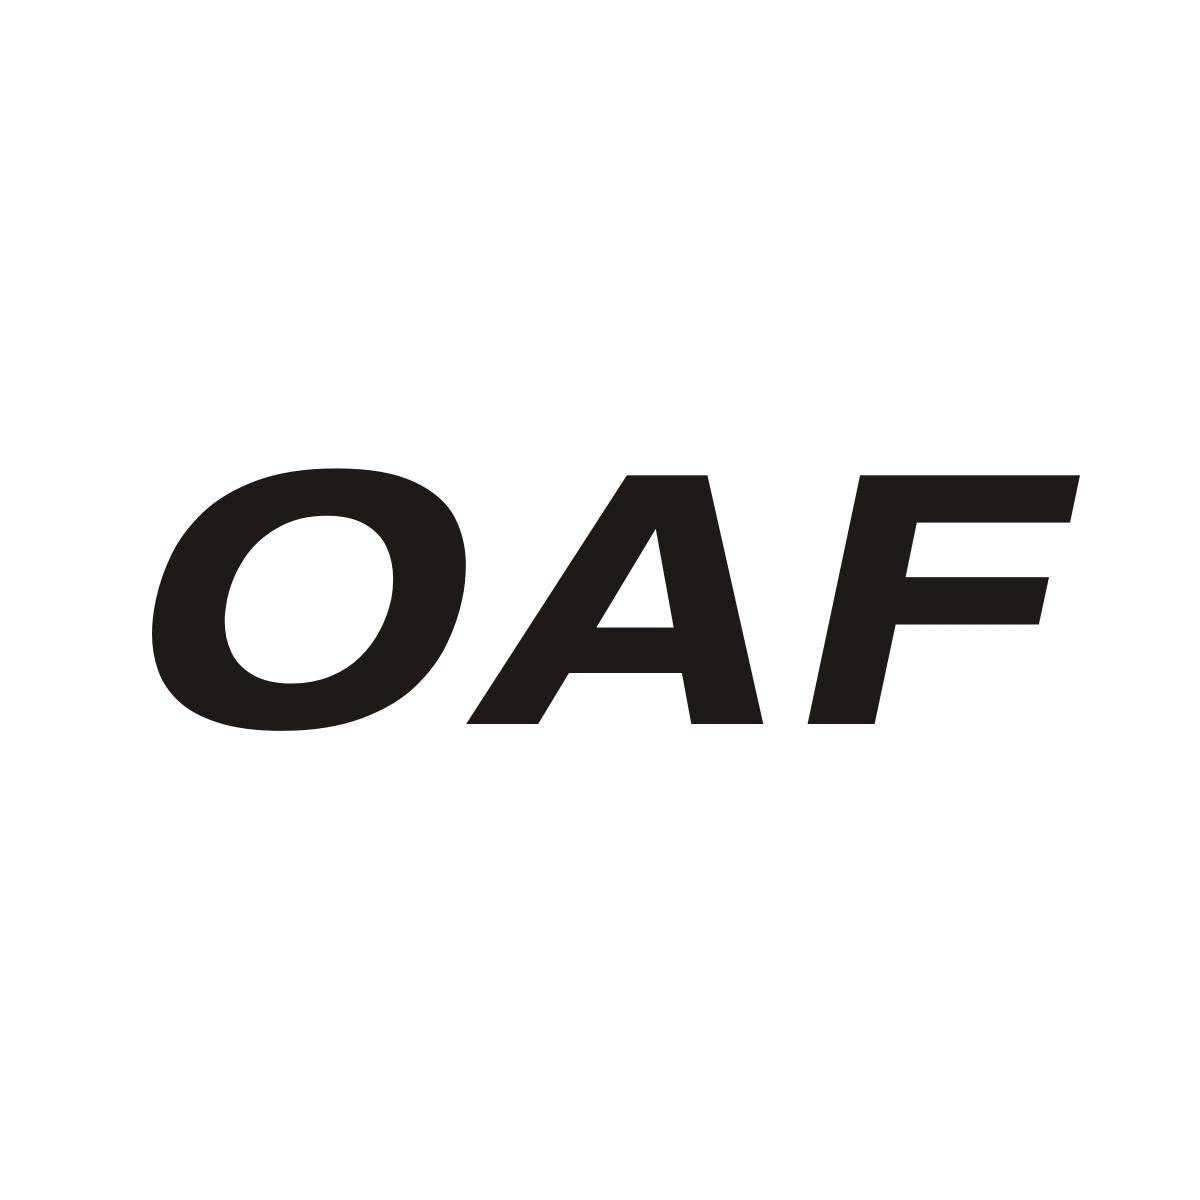 OAF